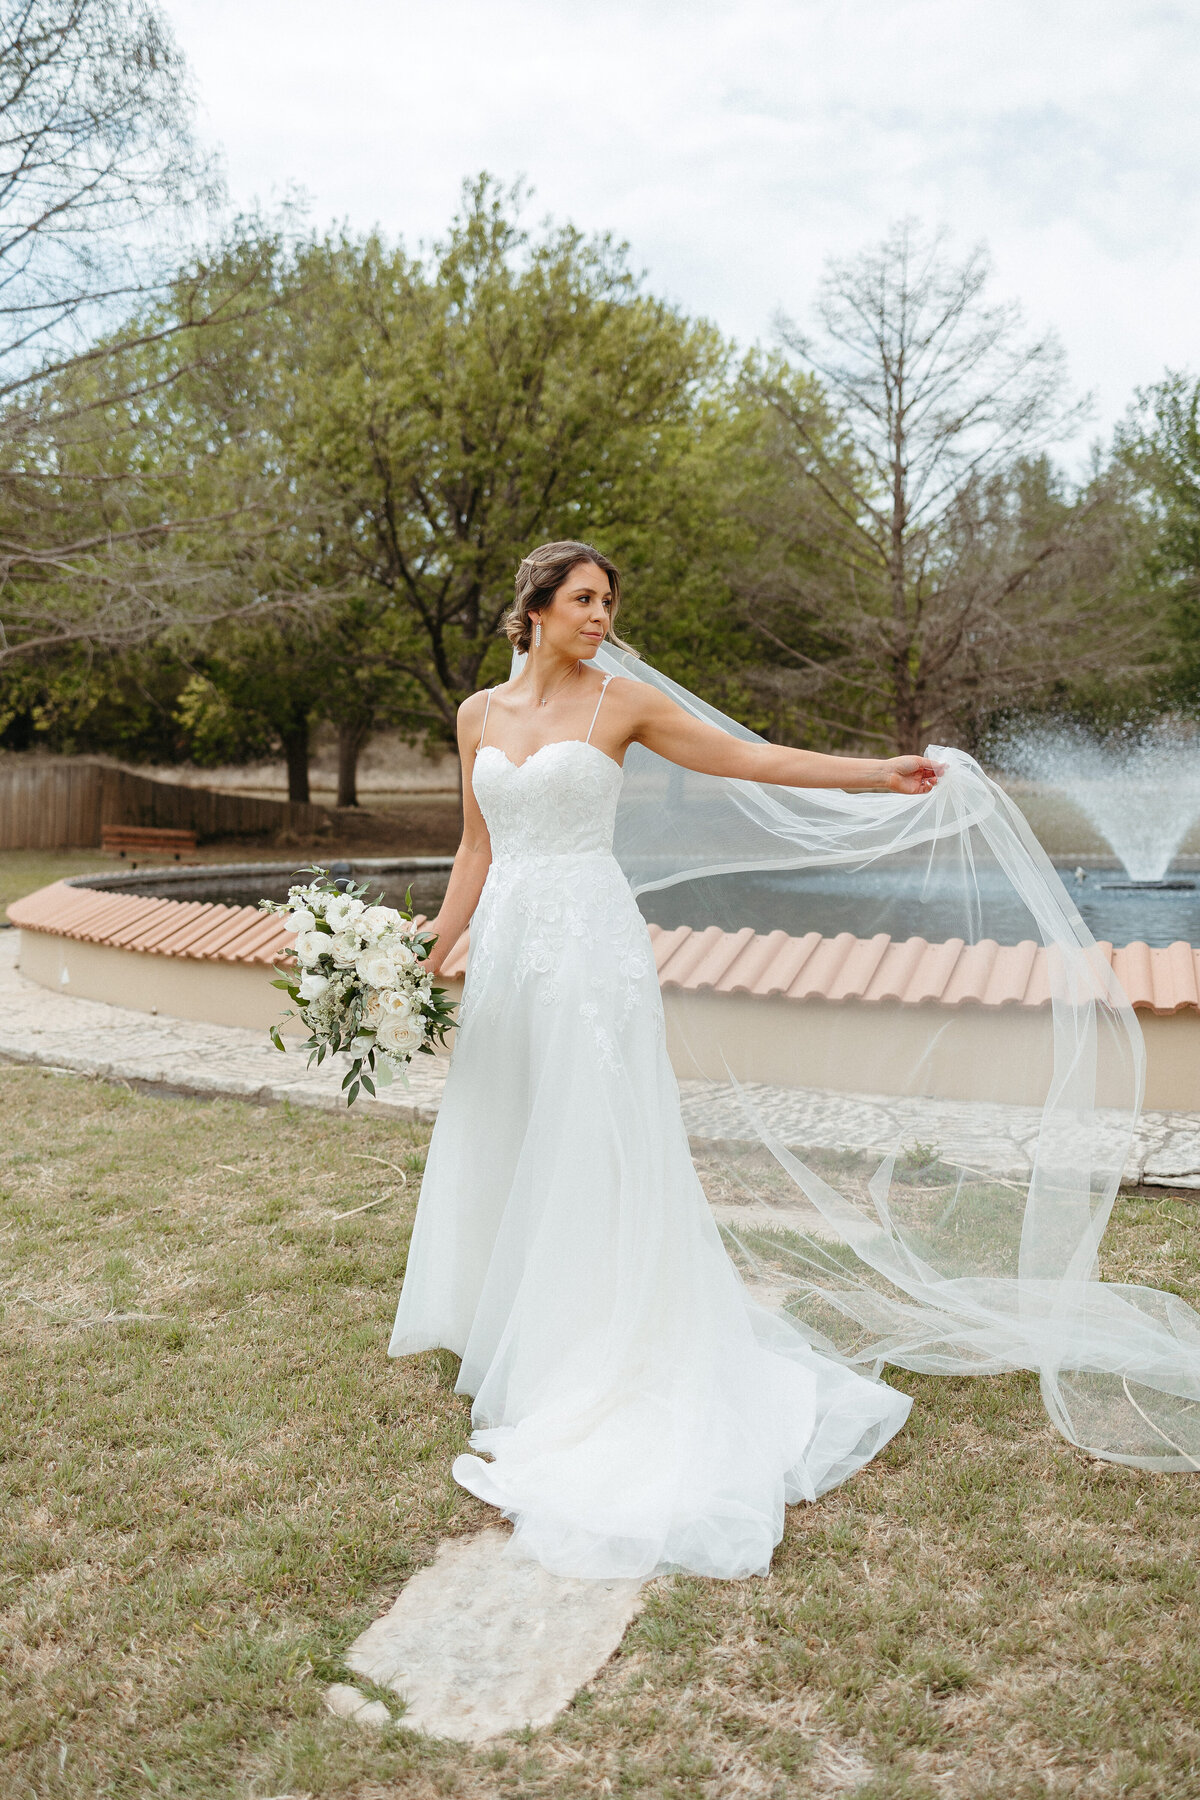 La-bonne-vie-ranch-bridal-session-texas-wedding-photographer-leah-thomason-4